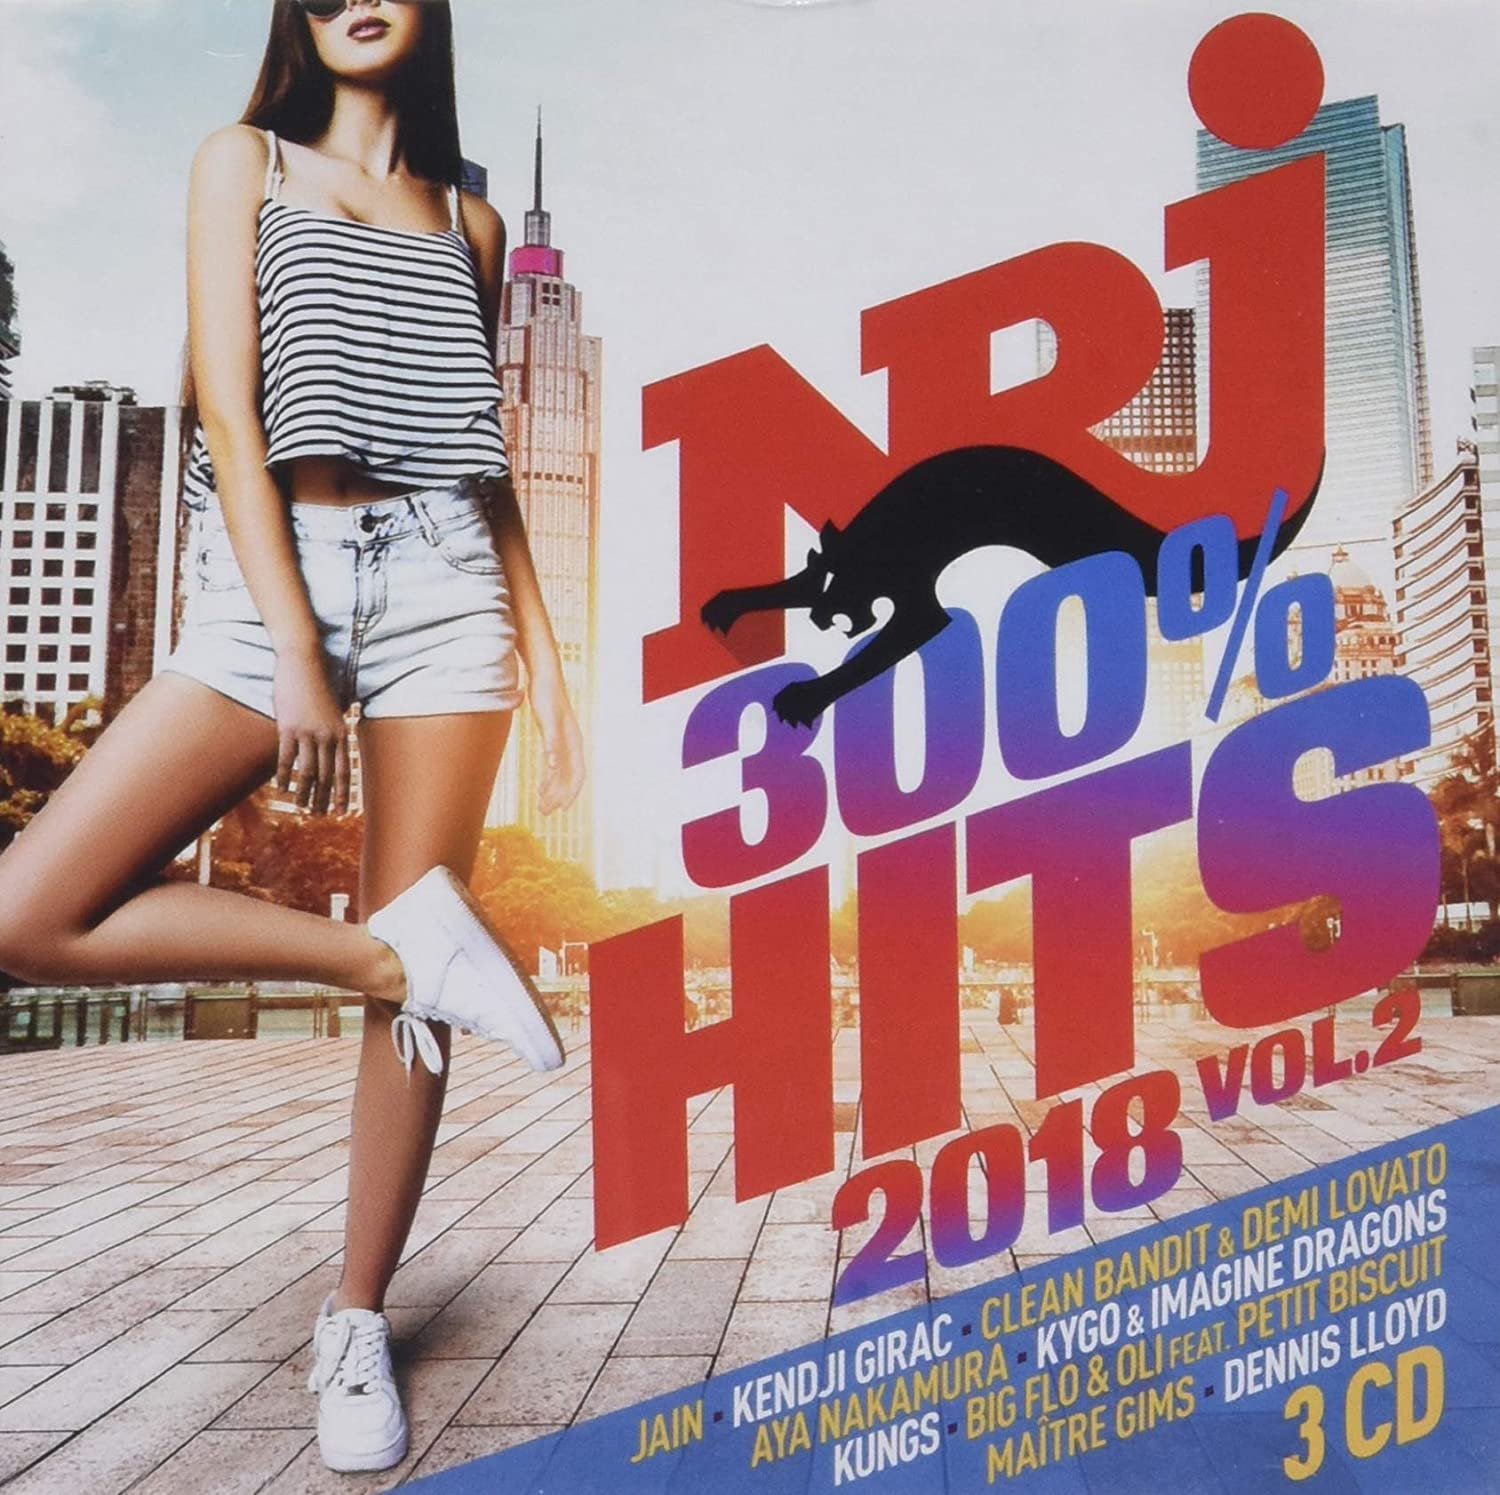 NRJ 300% Hits 2018, Vol. 2 — Various Artists | Last.fm